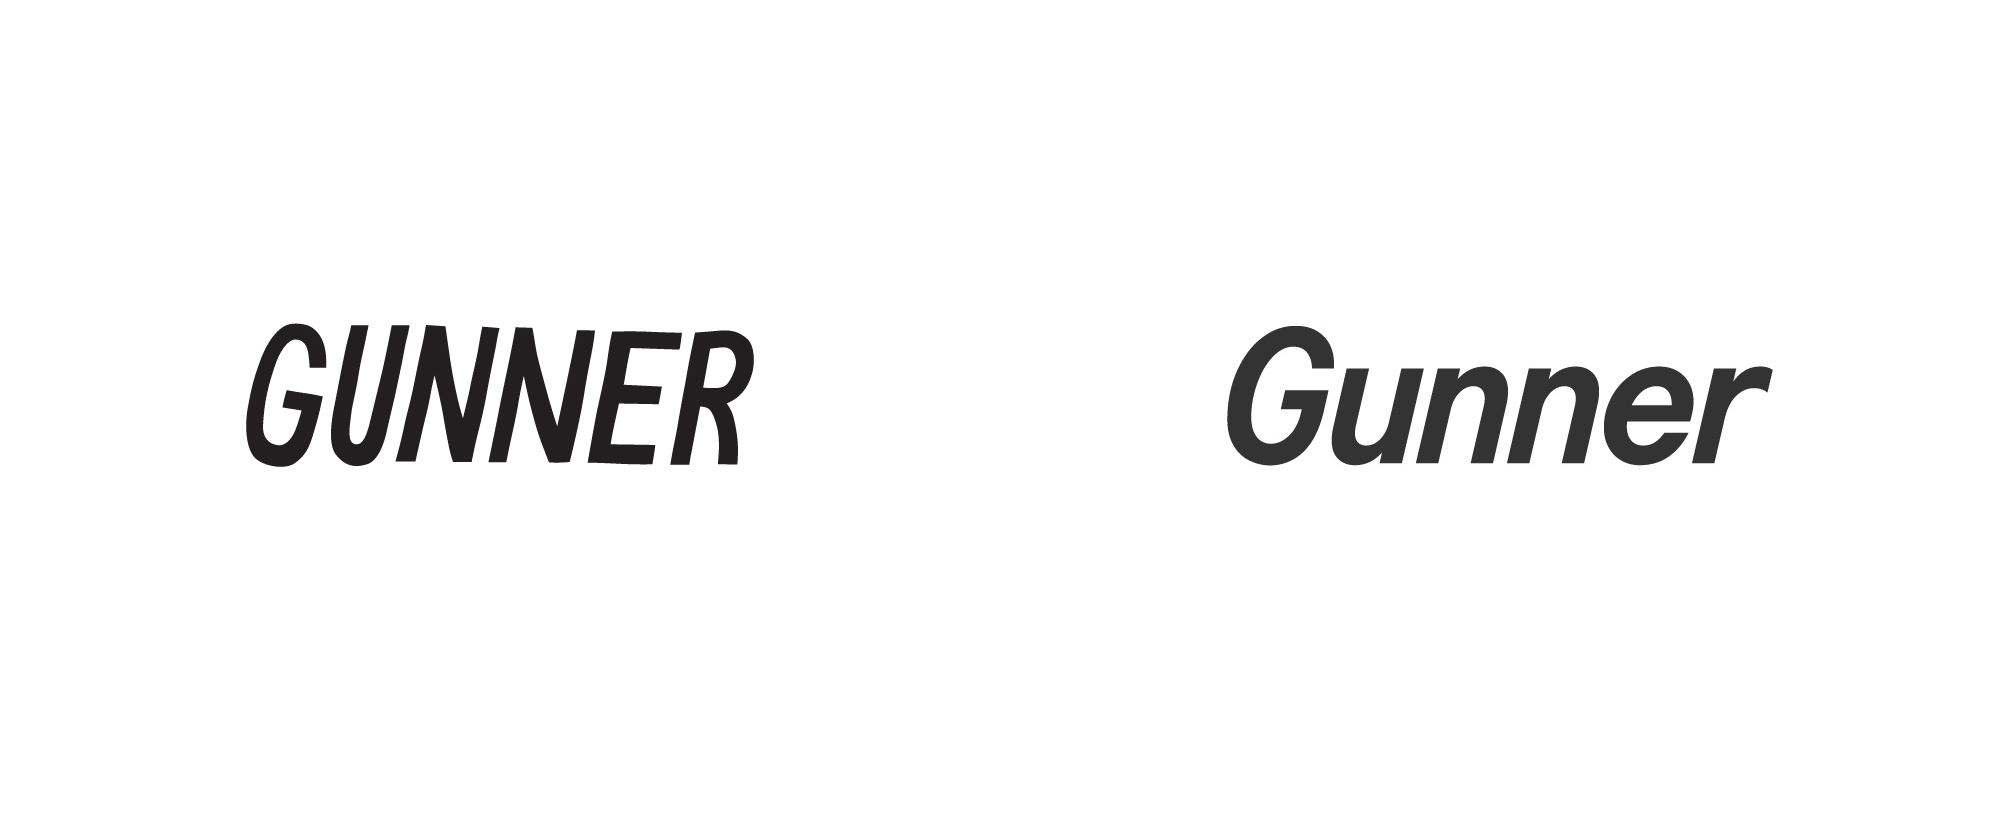 New Logo and Identity for Gunner by Stephen Kelleher